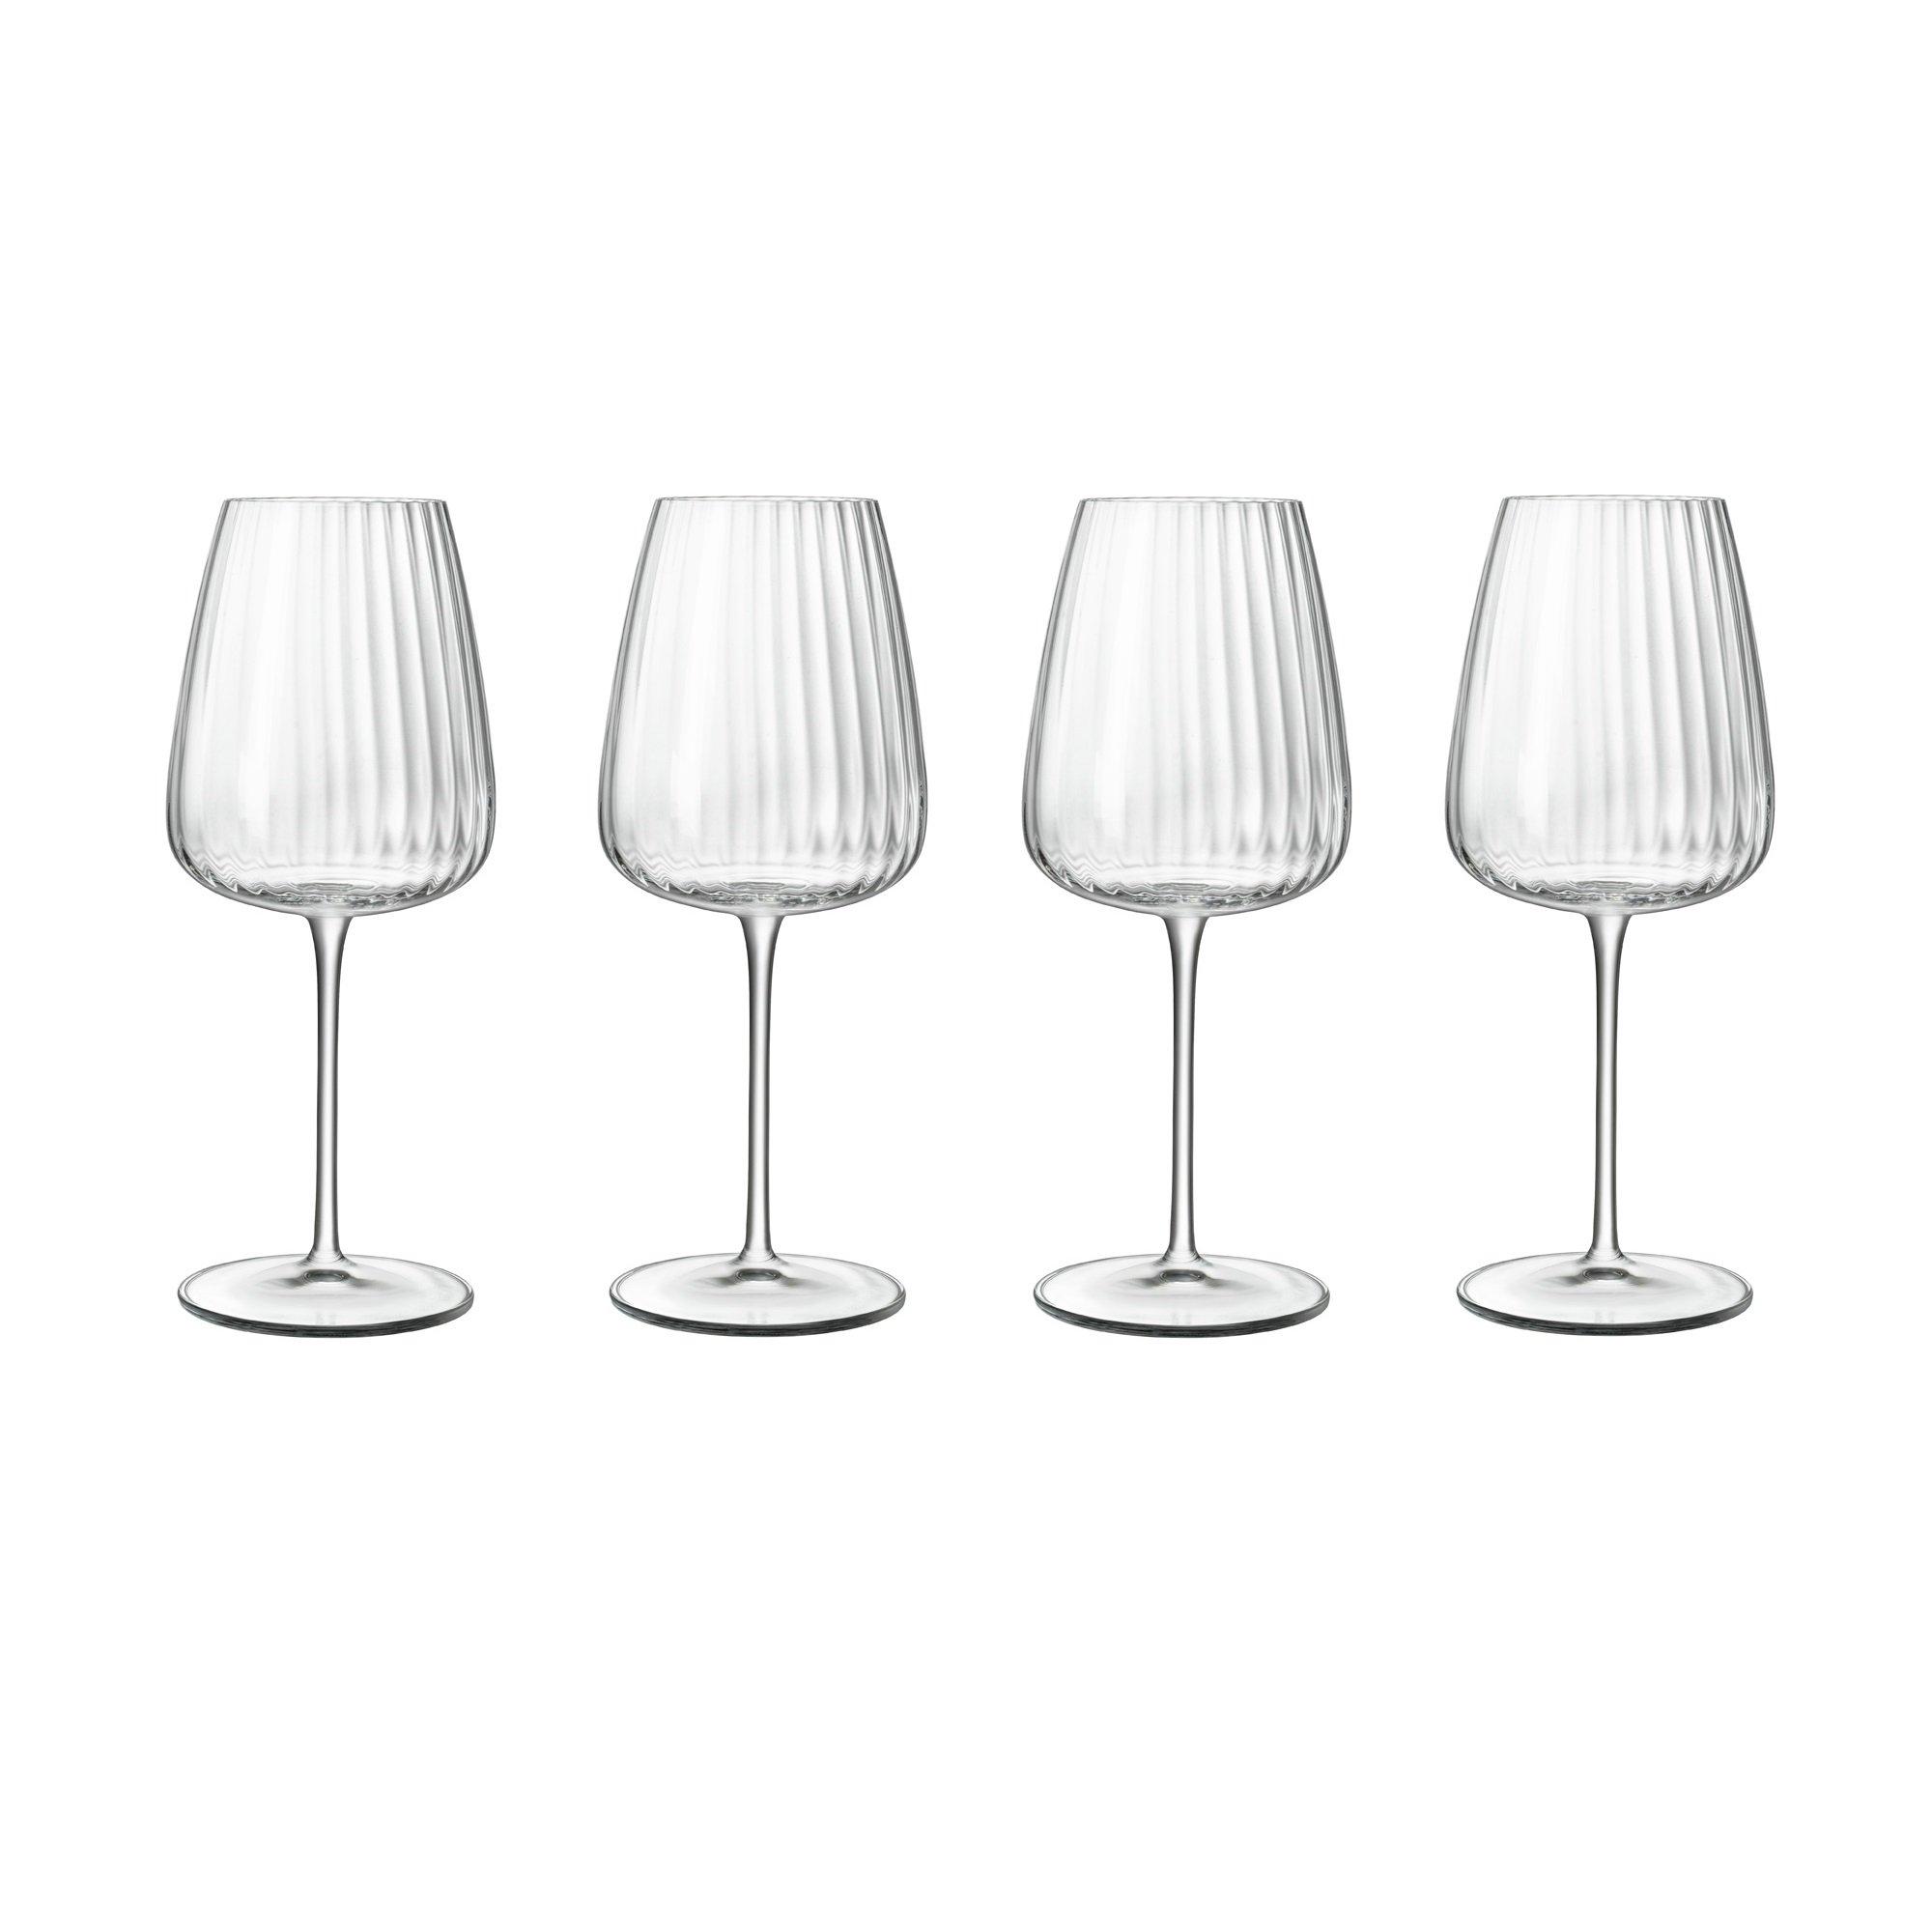 Optica Chardonnay Glasses - Dishwasher Safe, 550 ml - Pack of 4